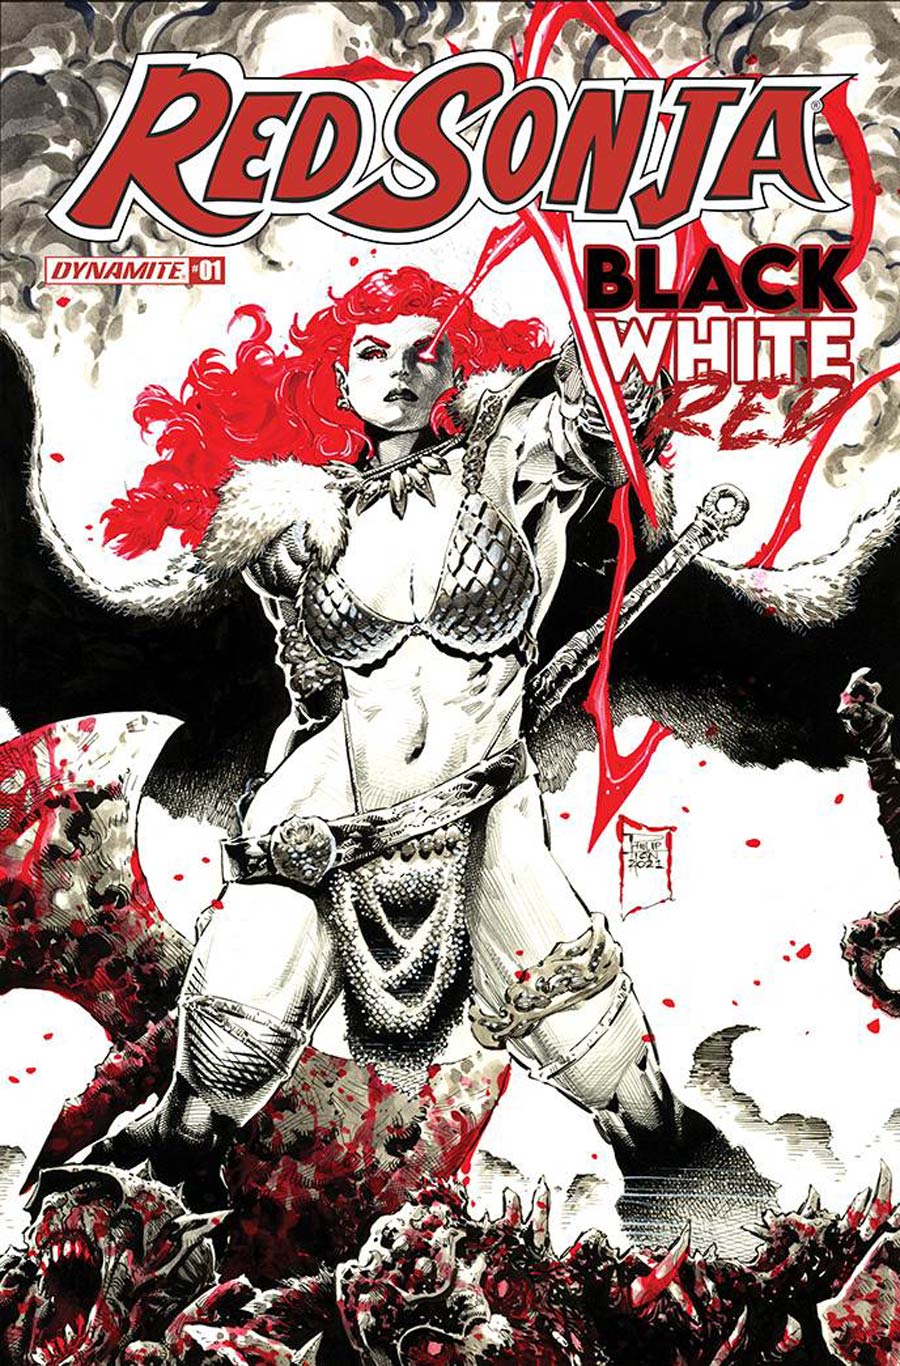 Red Sonja Black White Red #1 Cover C Variant Philip Tan